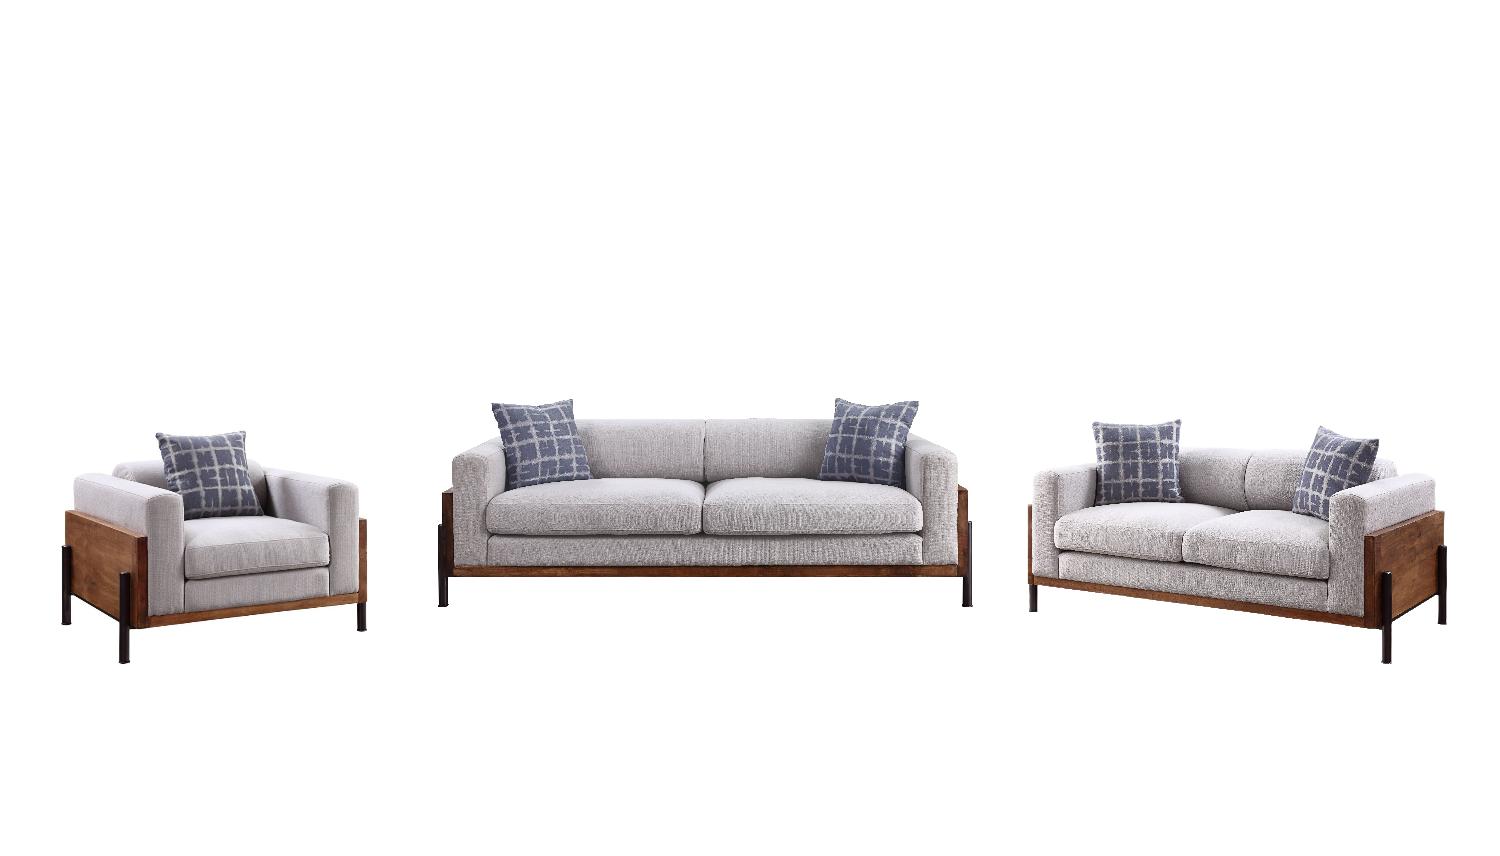 Modern Sofa Loveseat and Chair Set Pelton 54890-3pcs in Light Gray Fabric